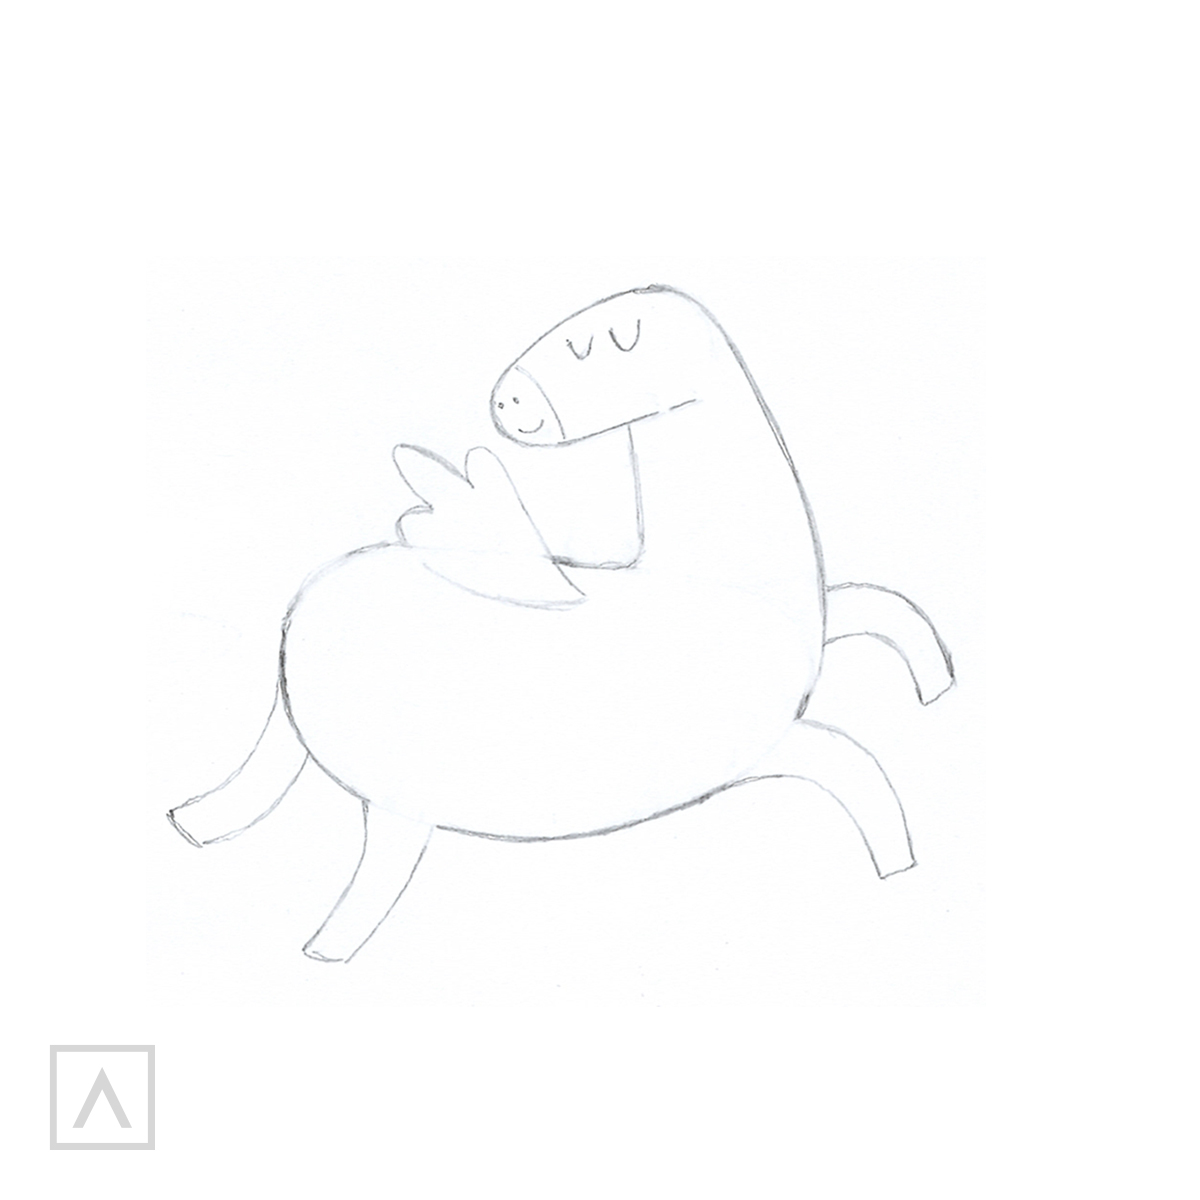 How to Draw a Unicorn - Step 3